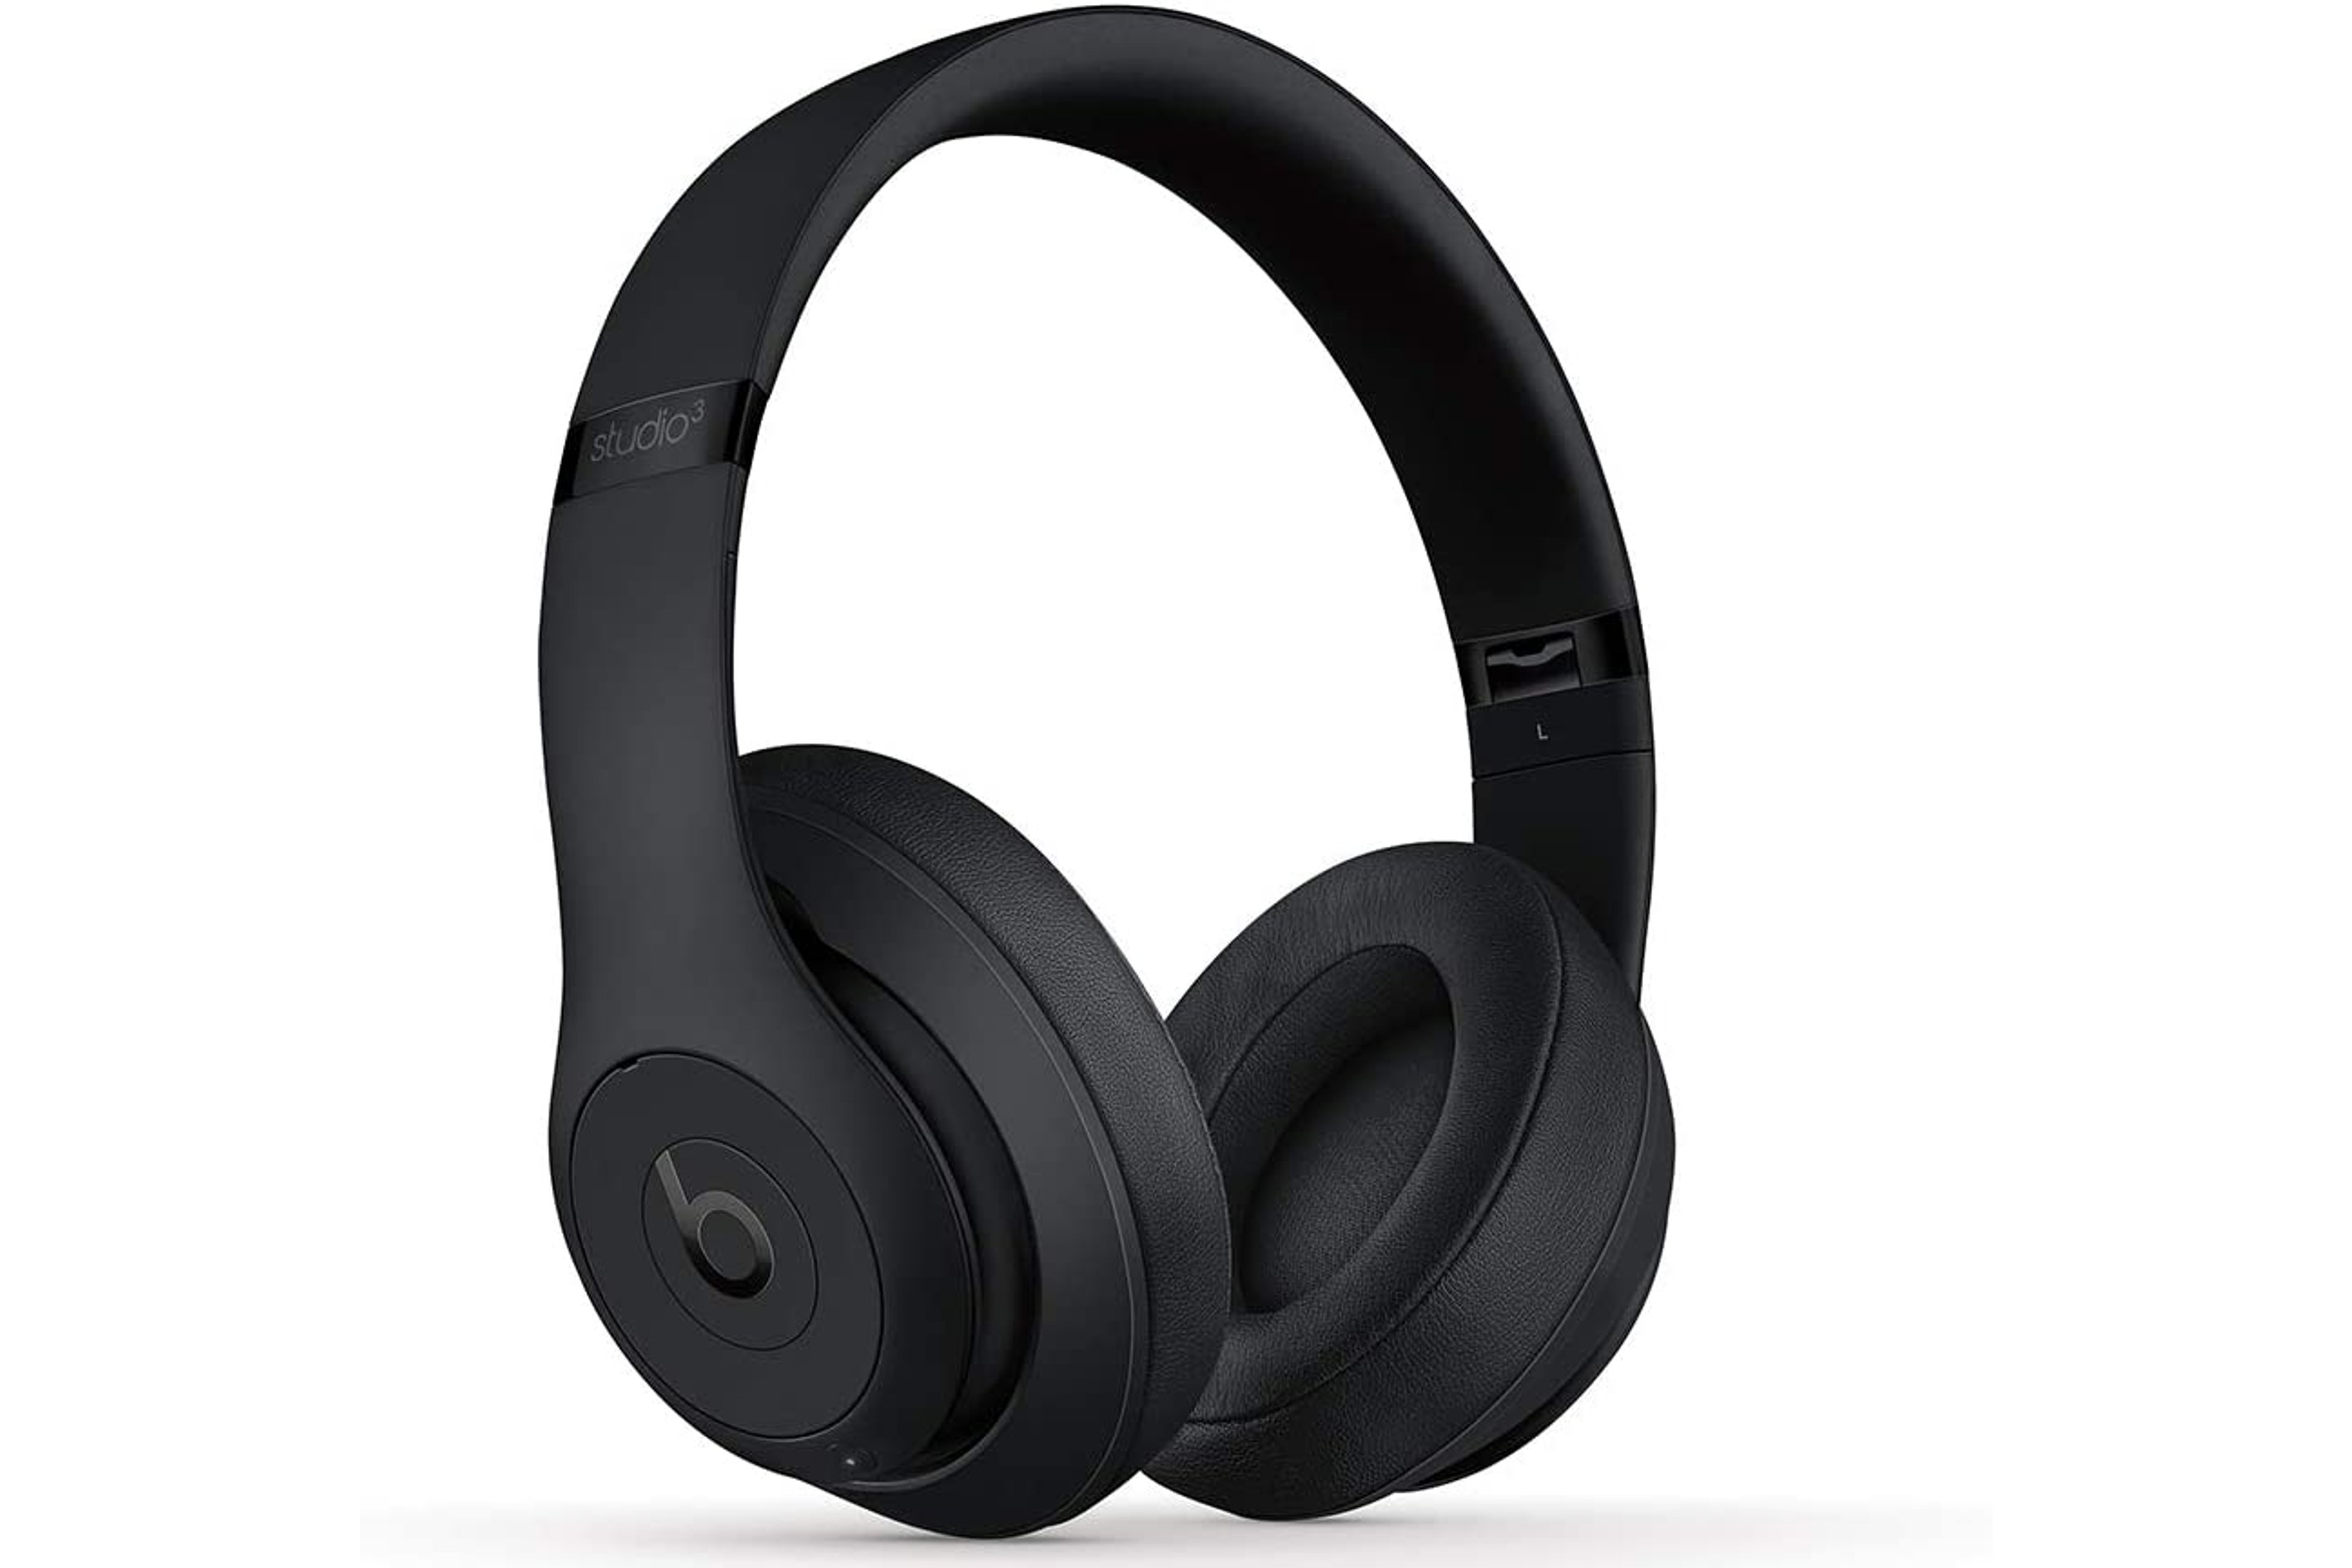 Beats Studio3 Wireless Noise Cancelling Headphones